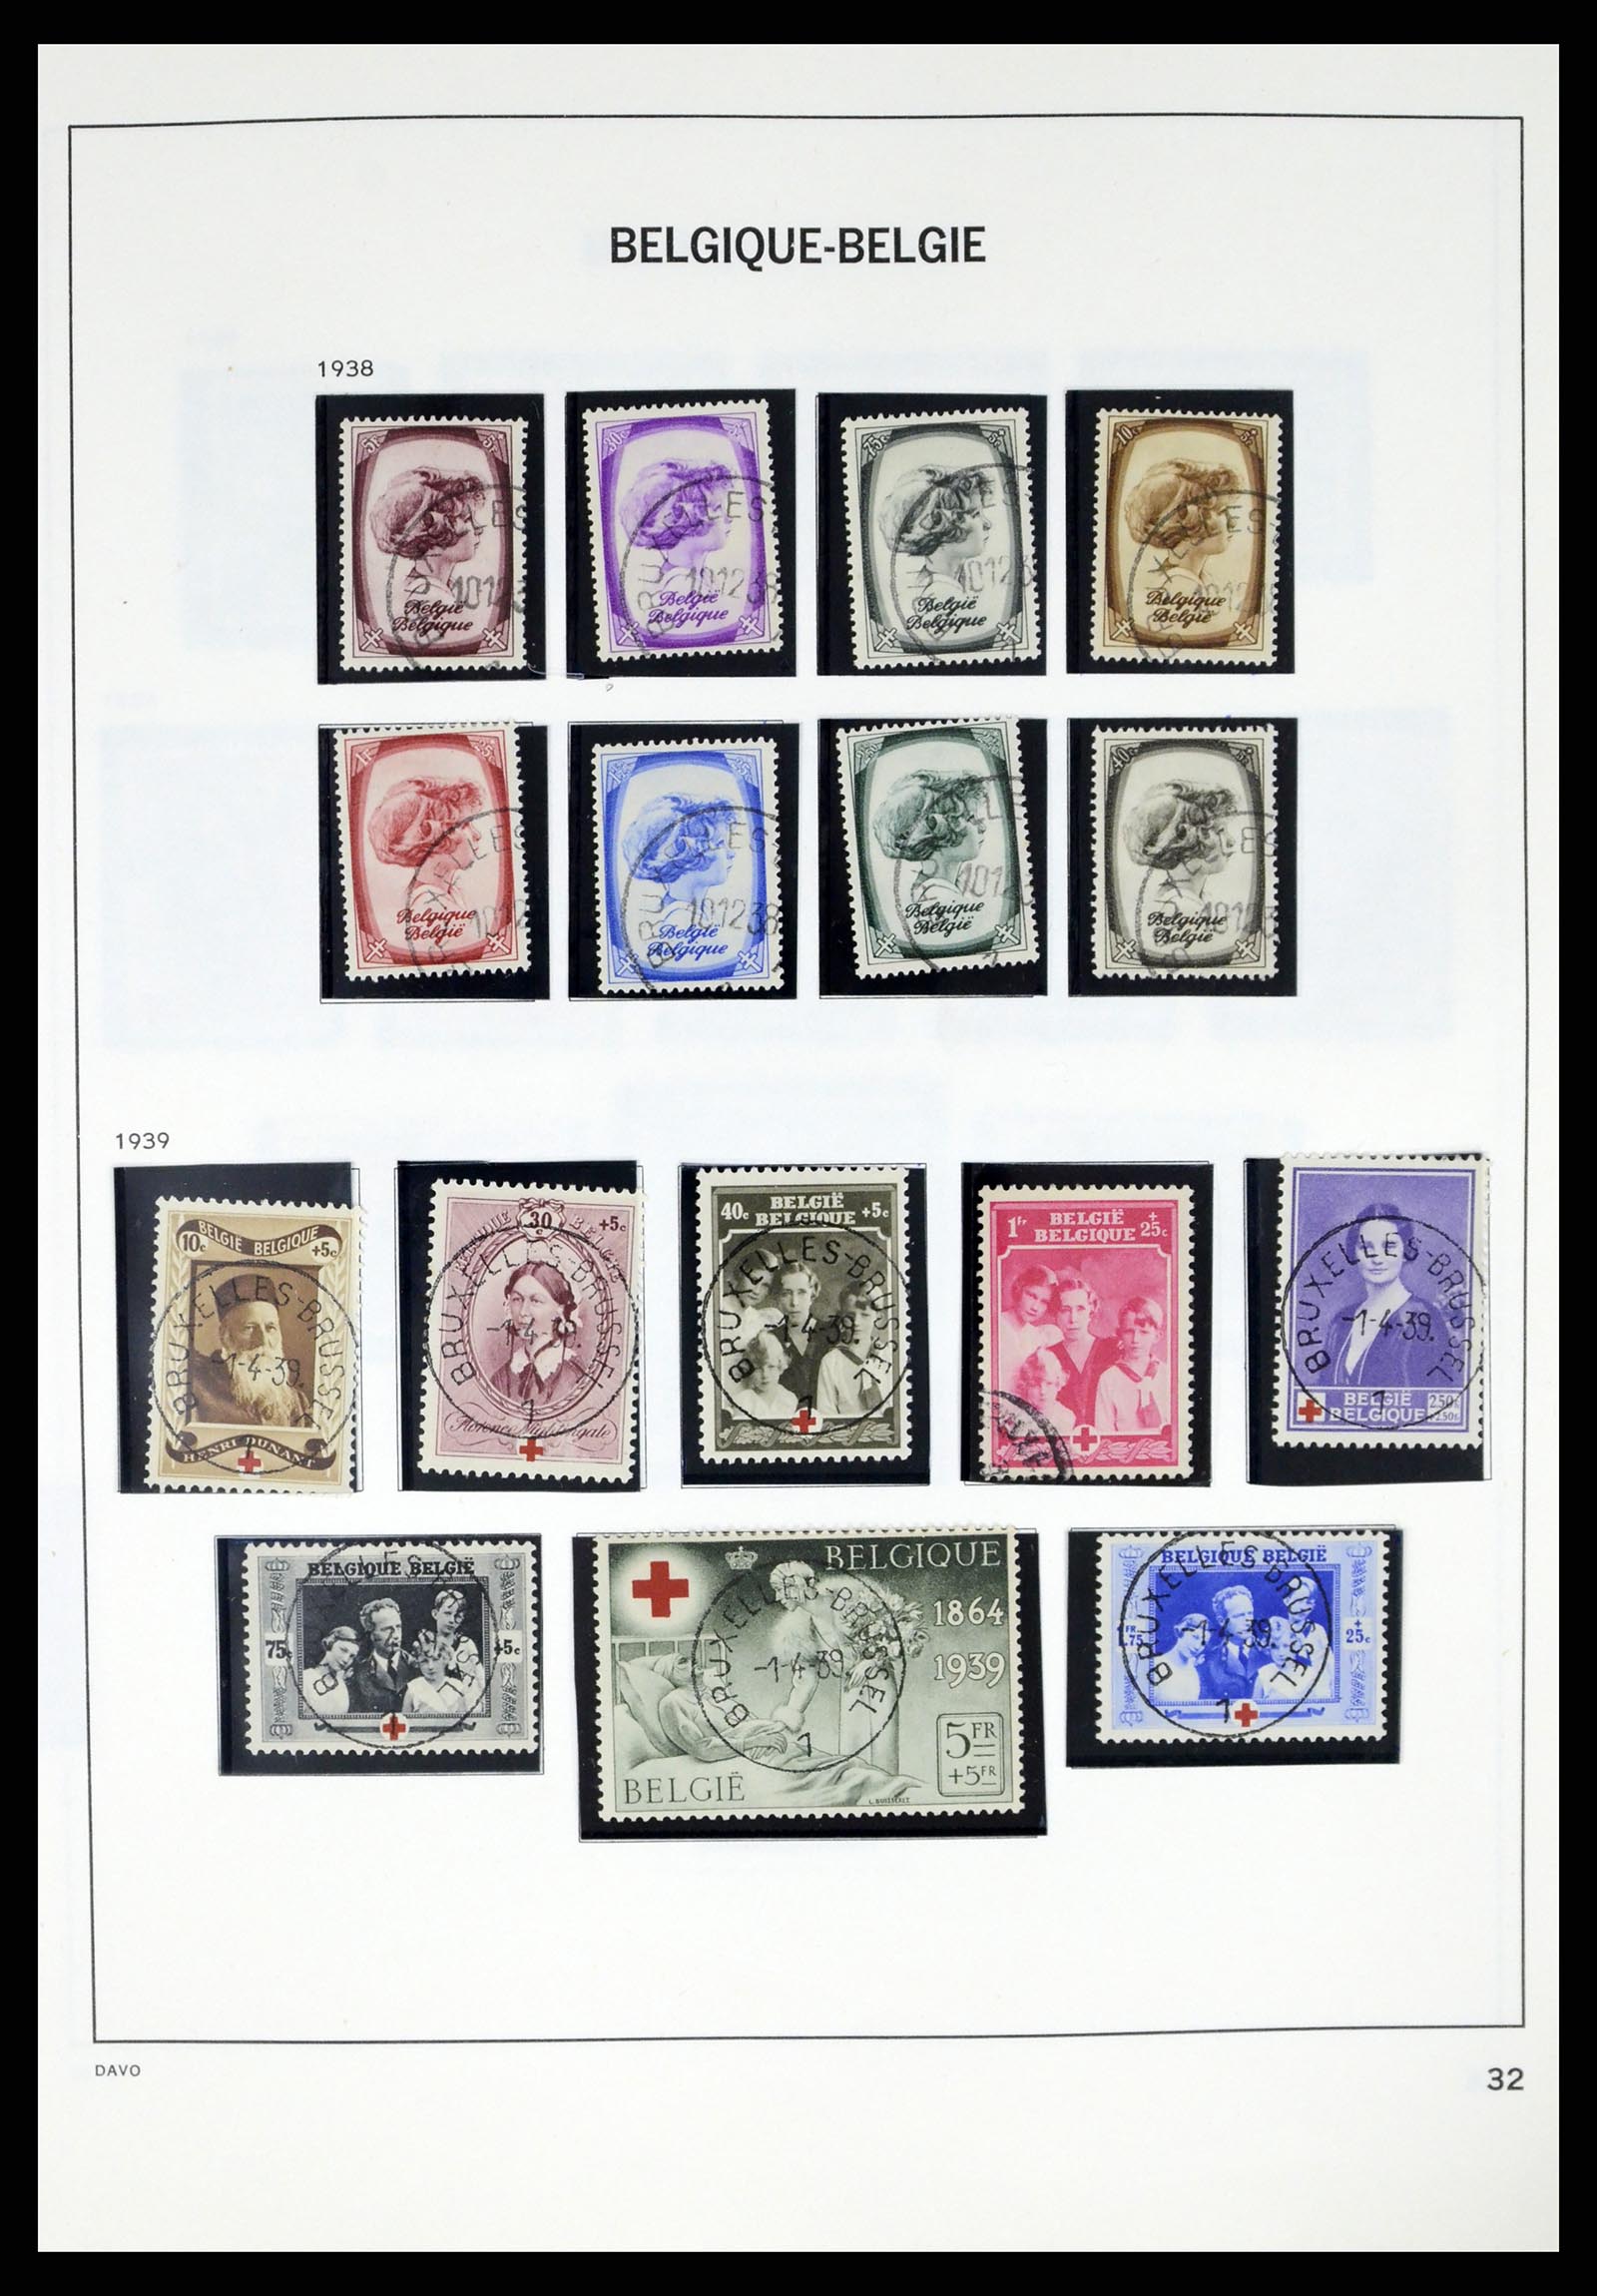 37367 030 - Stamp collection 37367 Belgium 1849-2003.